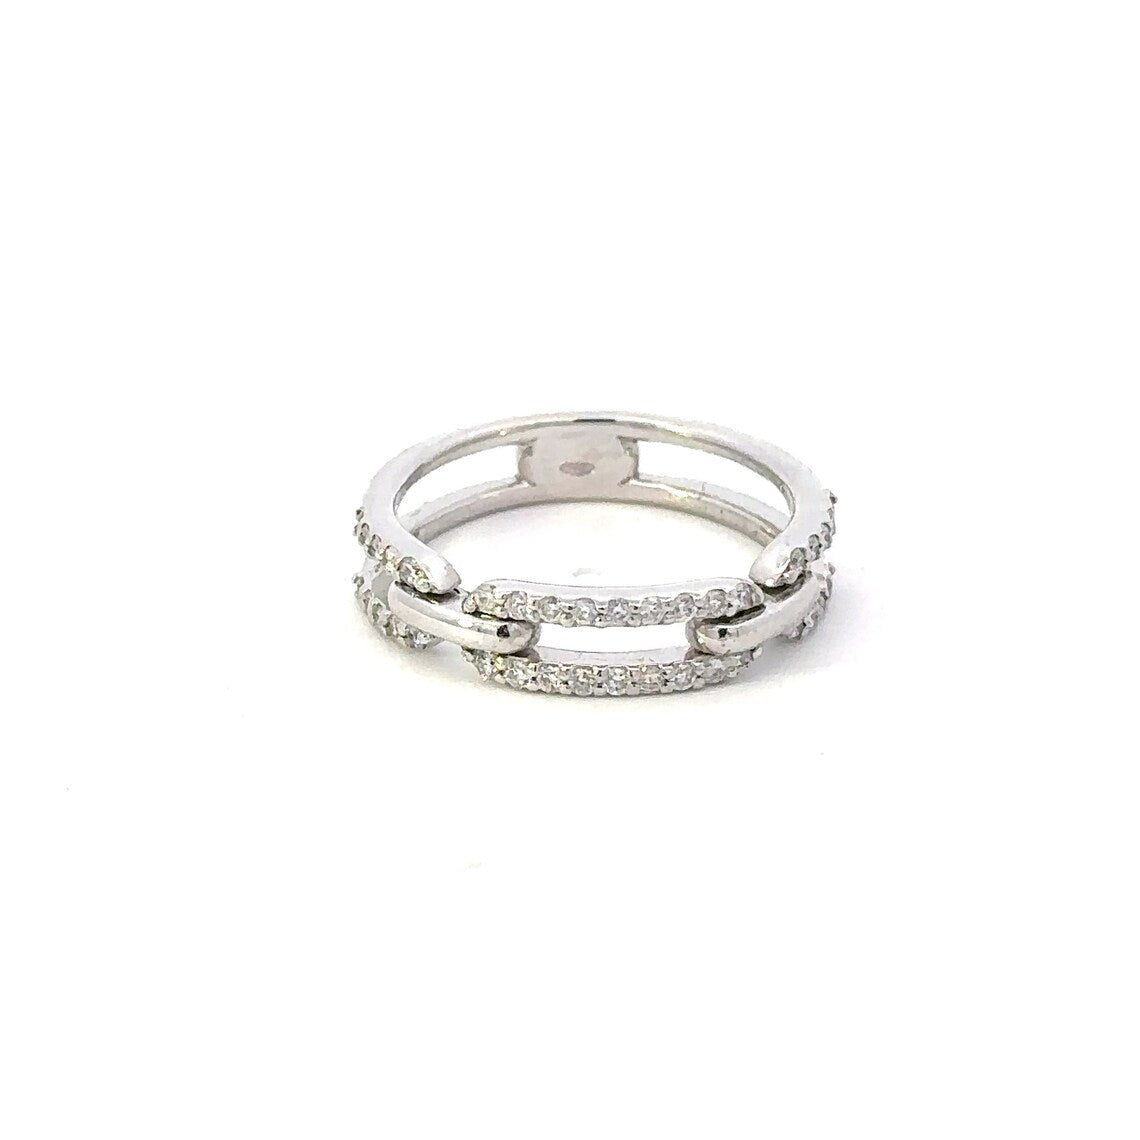 Sparkling Pave Diamond Ring in 18K White Gold